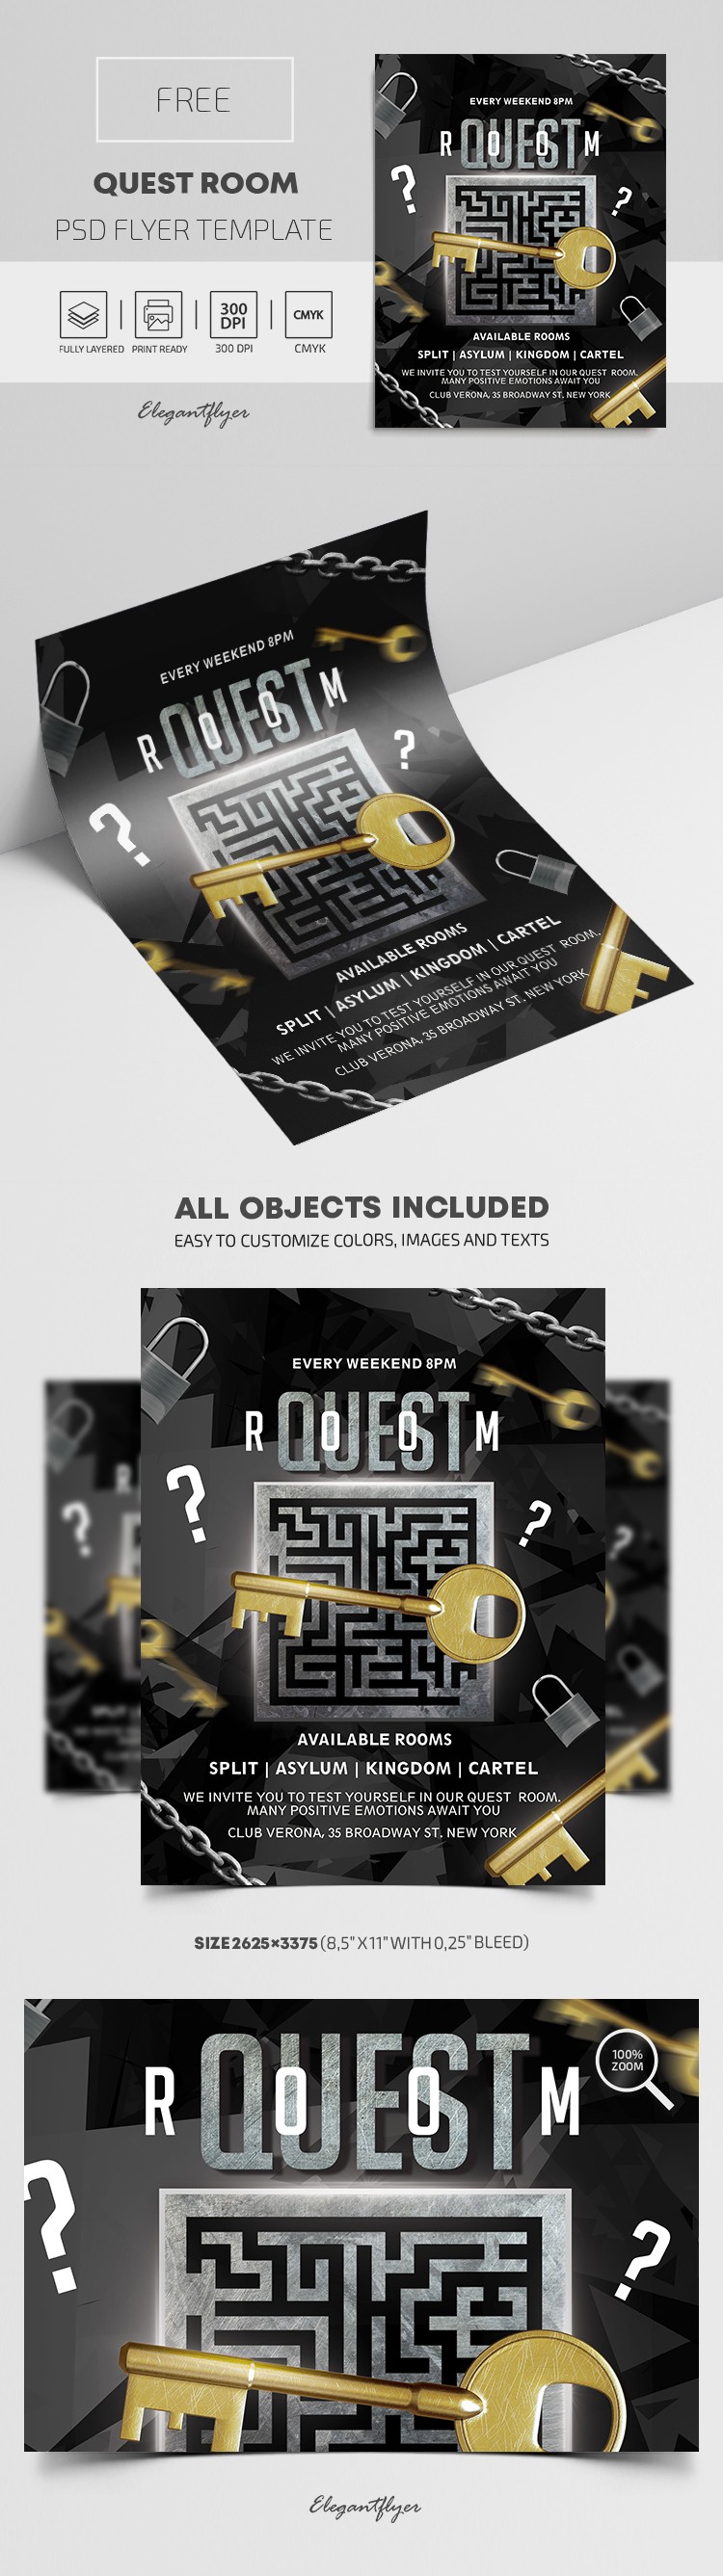 Quest Room Flyer by ElegantFlyer